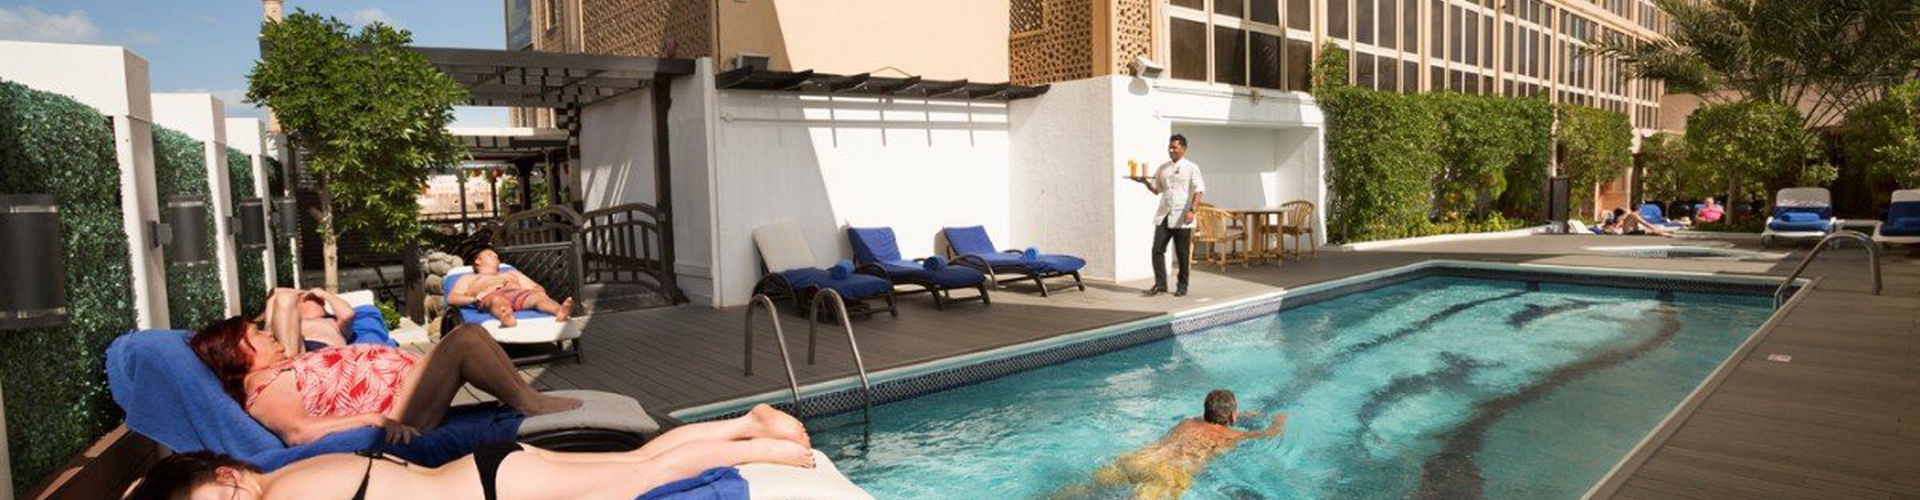 Arabian Courtyard Hotel & Spa rediseño2 - Bur Dubaï - 